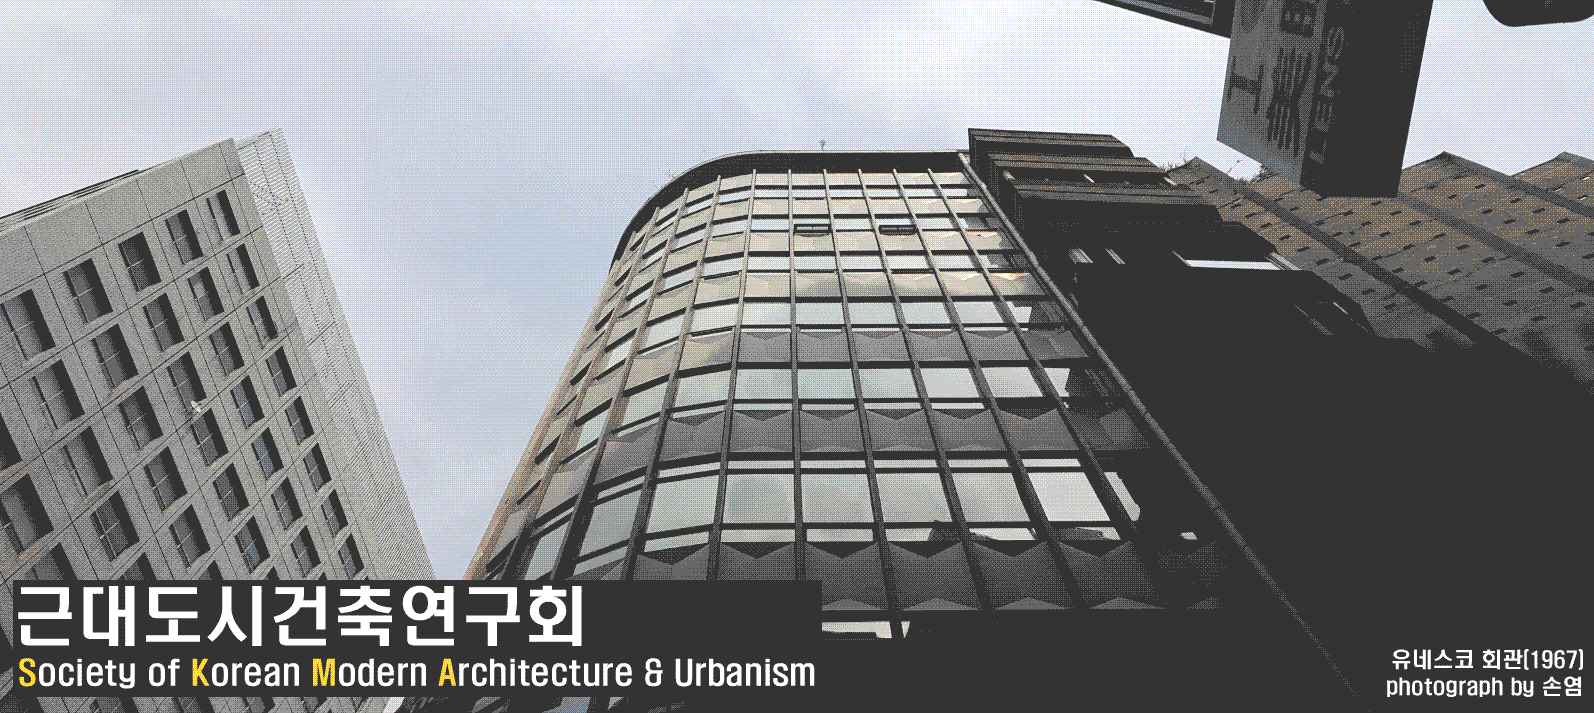 Society of Korean Modern Architecture & Urbanism